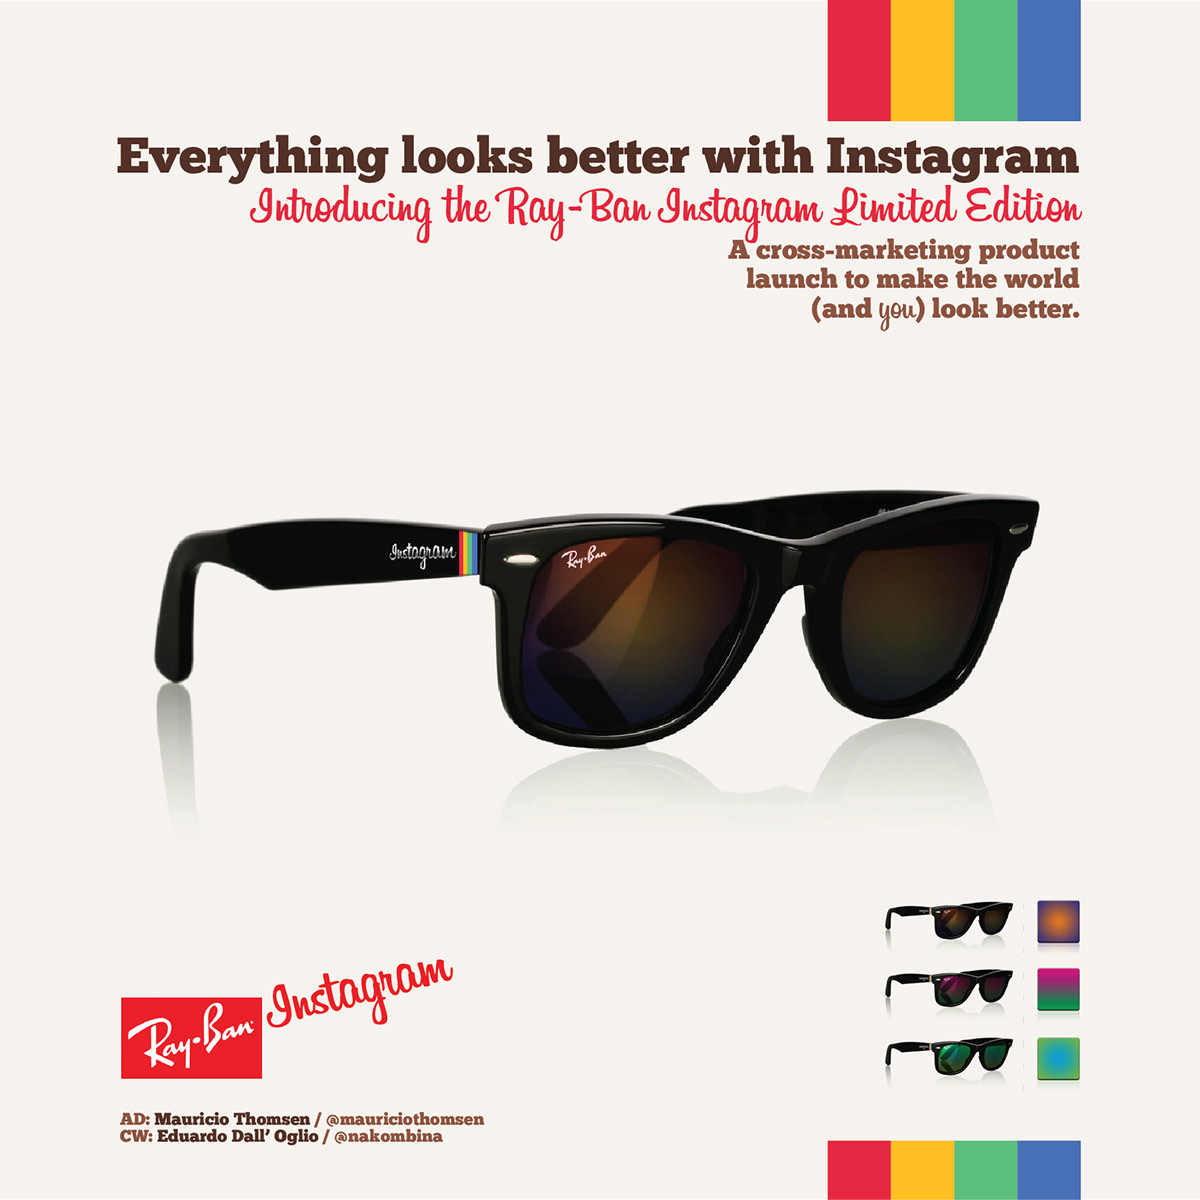 Ray-ban ray ban instagram glasses cross-marketing product prototype creative